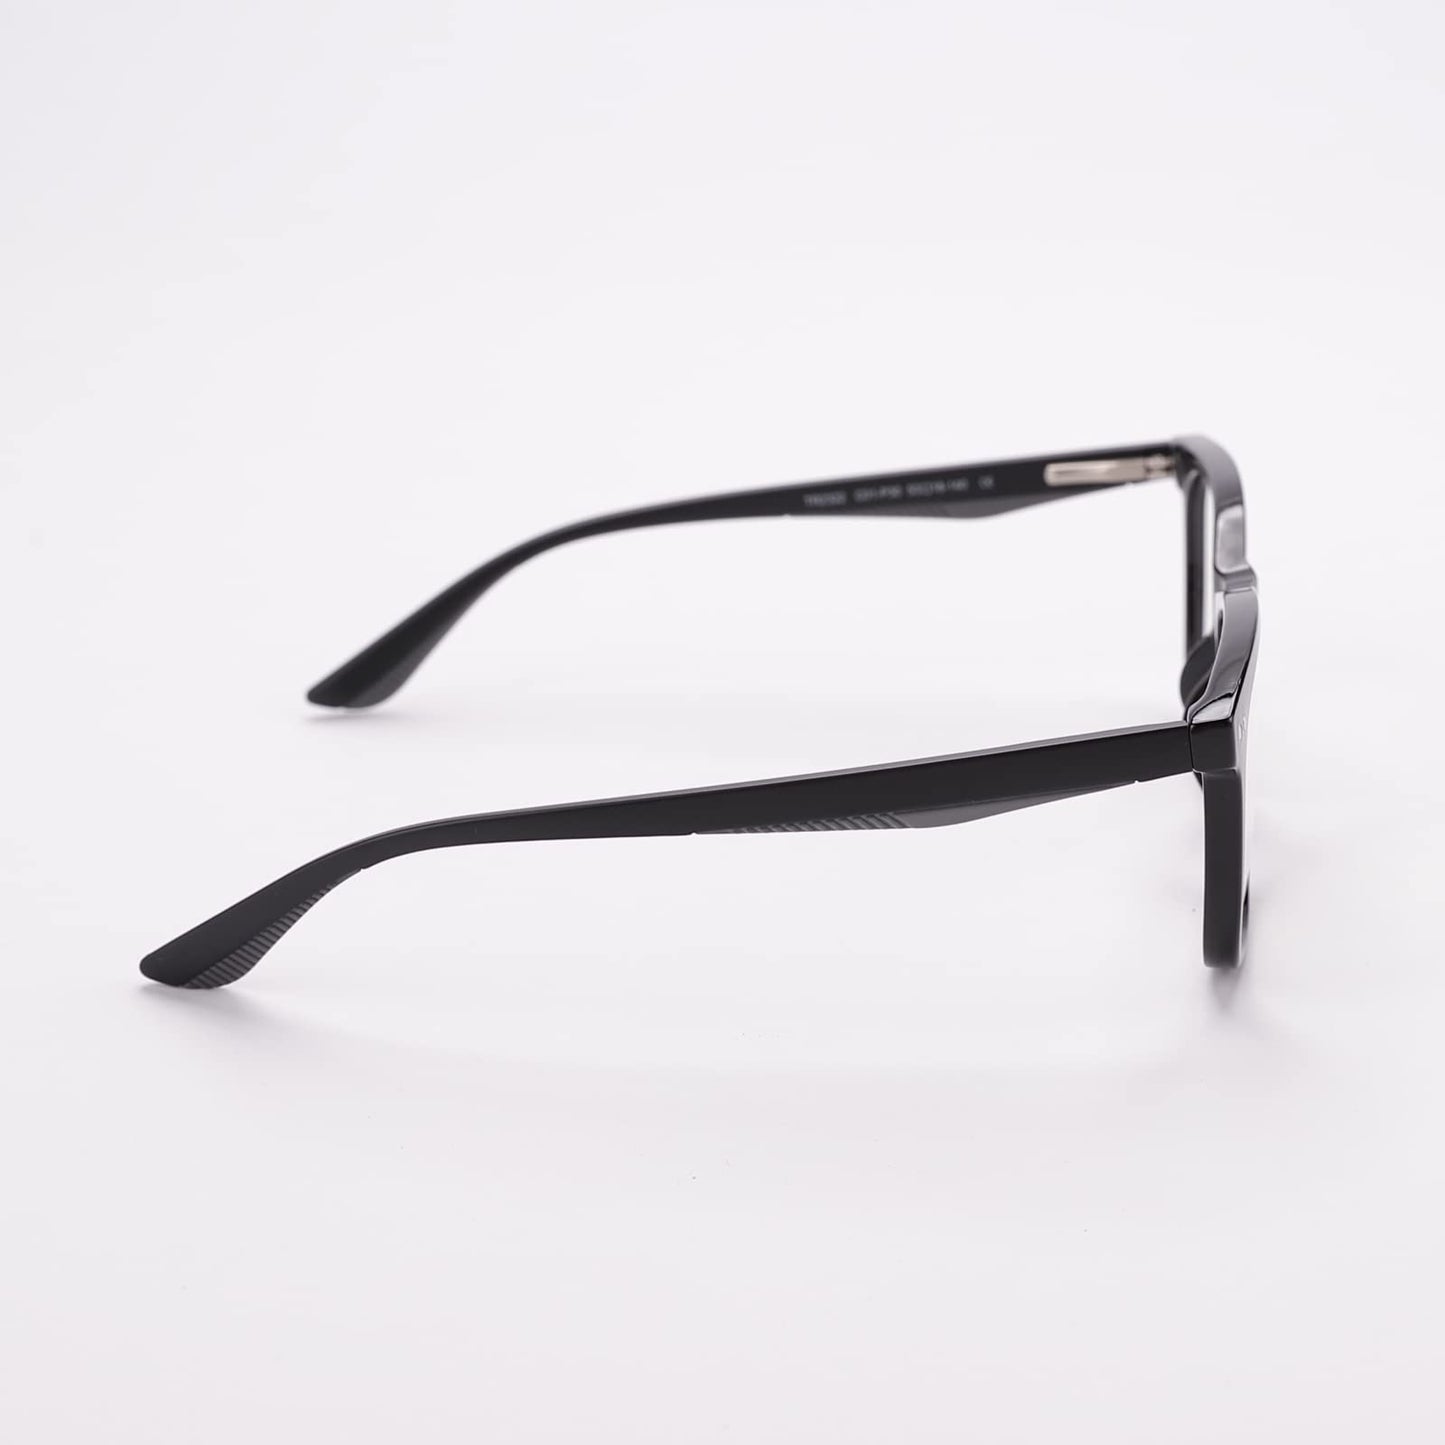 Intellilens  Zero Power Blue Cut Computer Glasses  Anti Glare Lightweight  Blocks Harmful Rays  UV Protection Specs  For Men  Women  Black  Square Medium